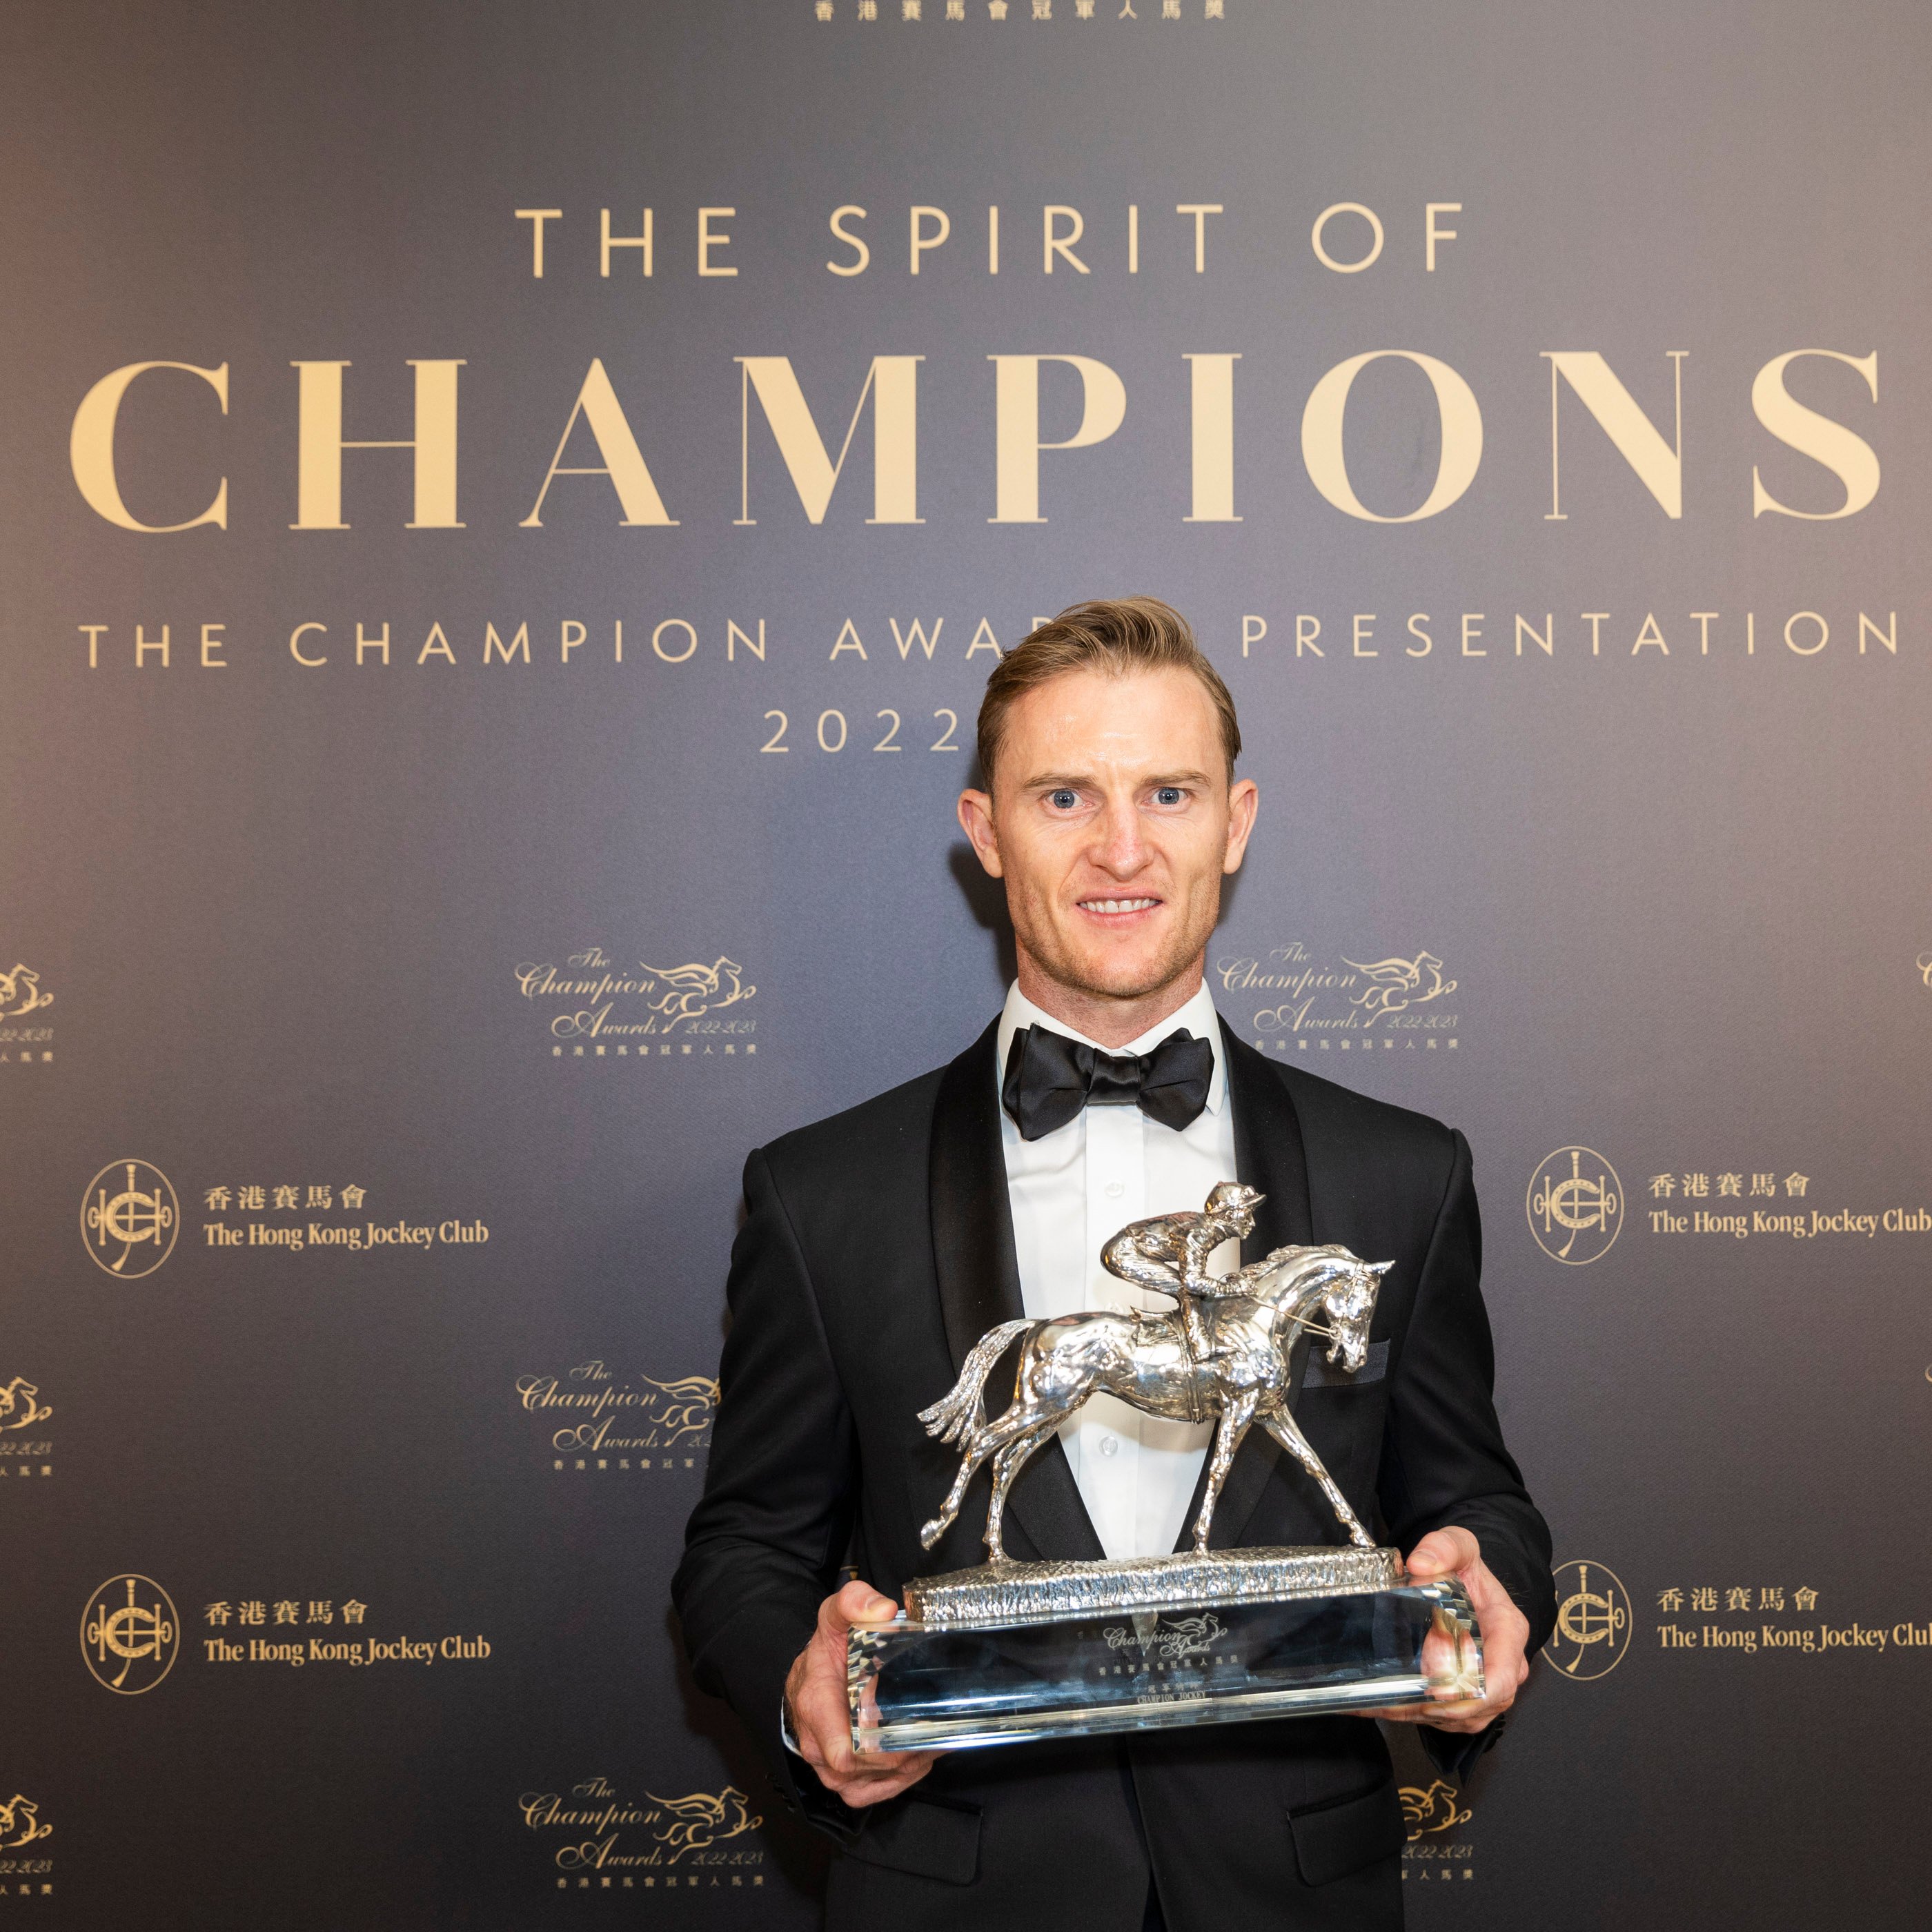  Zac Purton received his sixth Champion Jockey Award at The Champion Awards.  